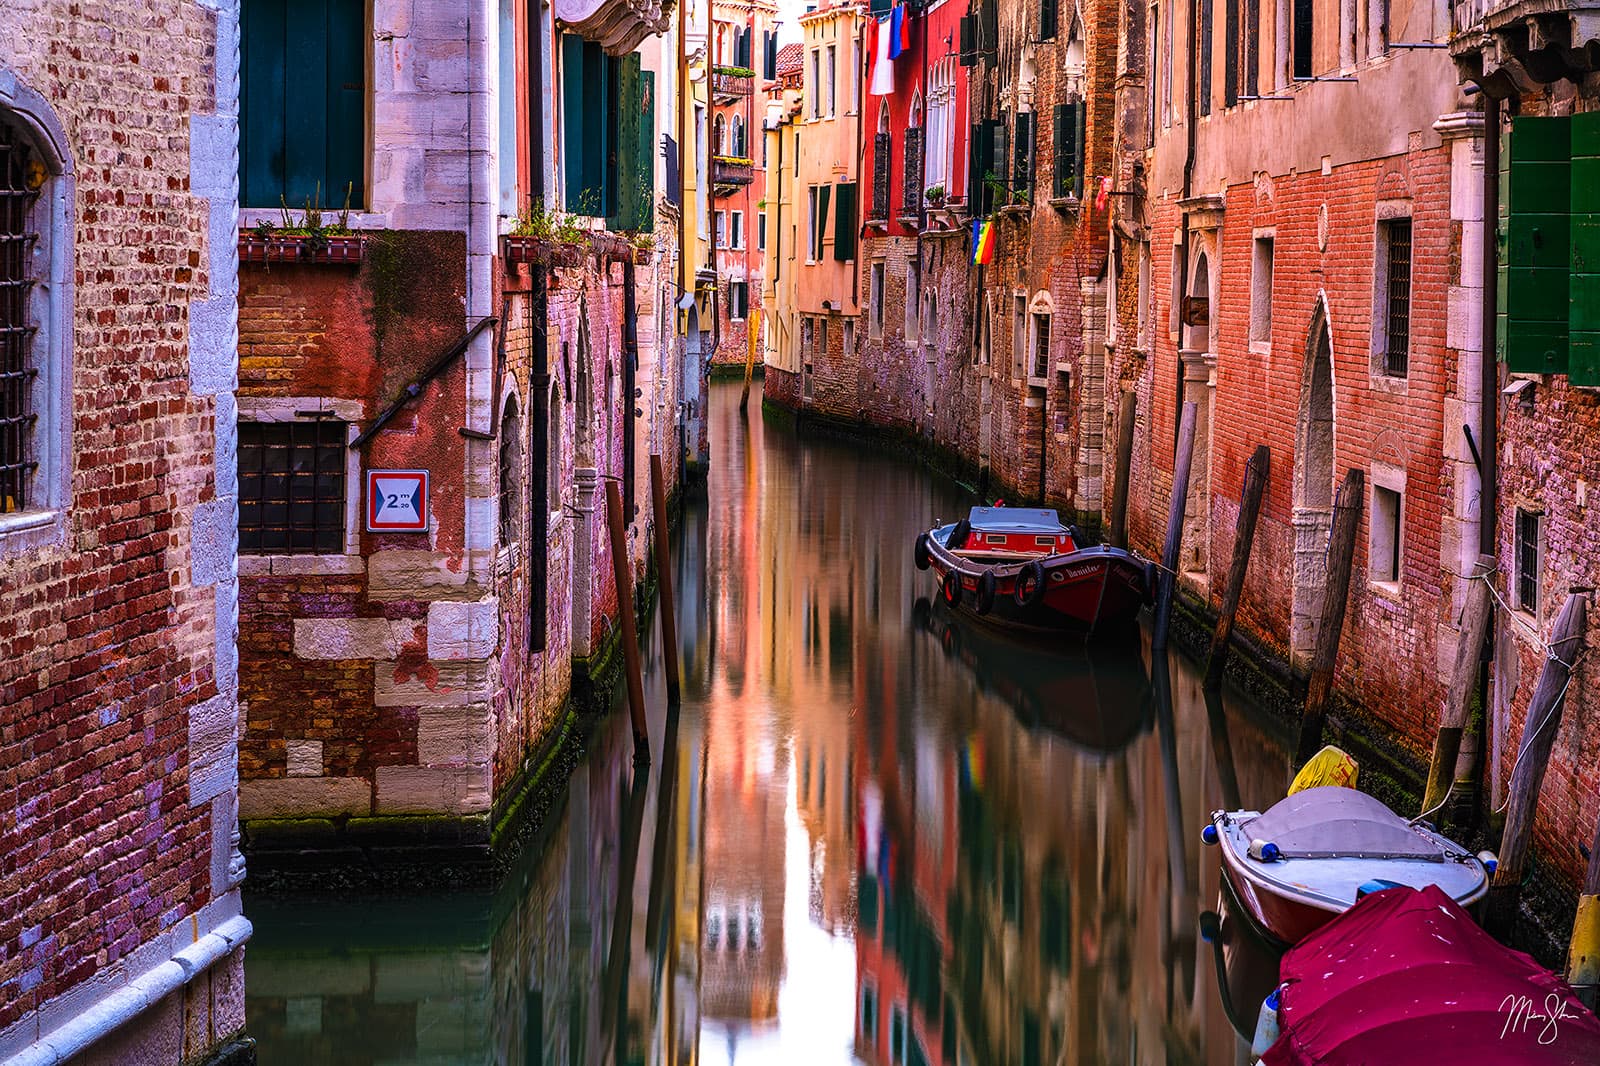 Venice, The City of Water - Venice, Italy